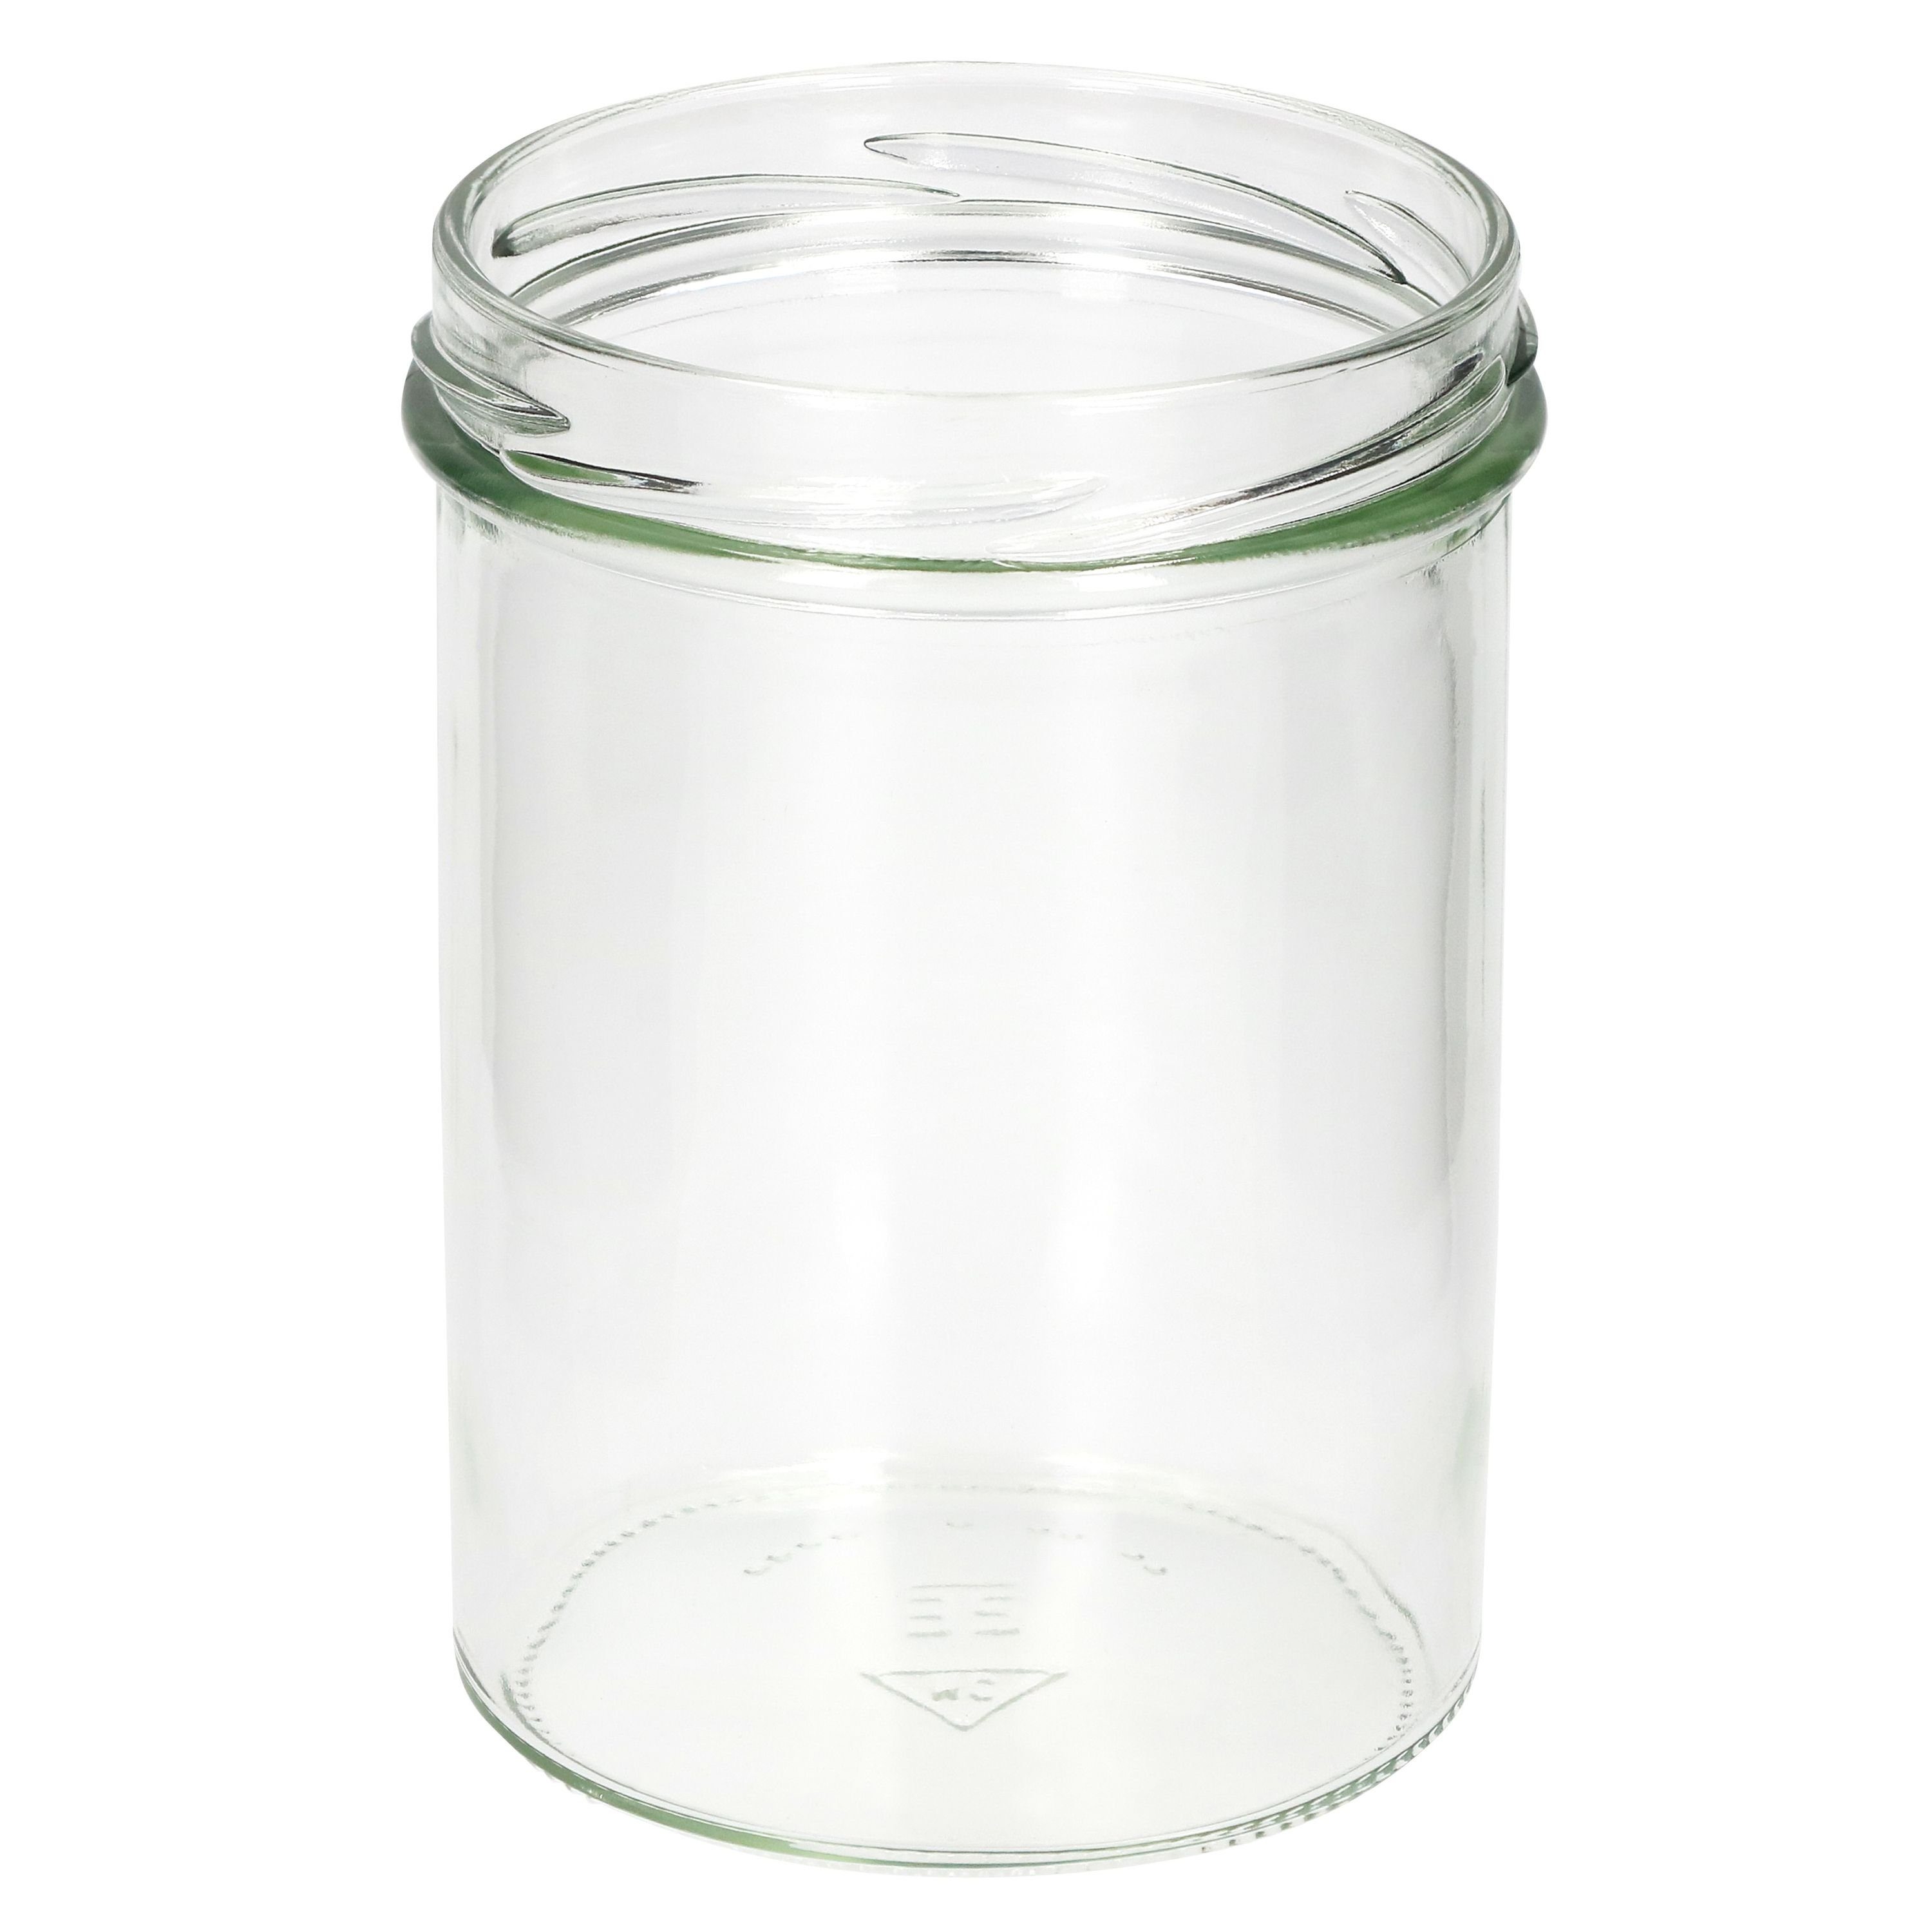 Einmachglas Sturzglas incl Glas Rezeptheft, 12er Set MamboCat Merry 82 435 To Deckel ml Christmas